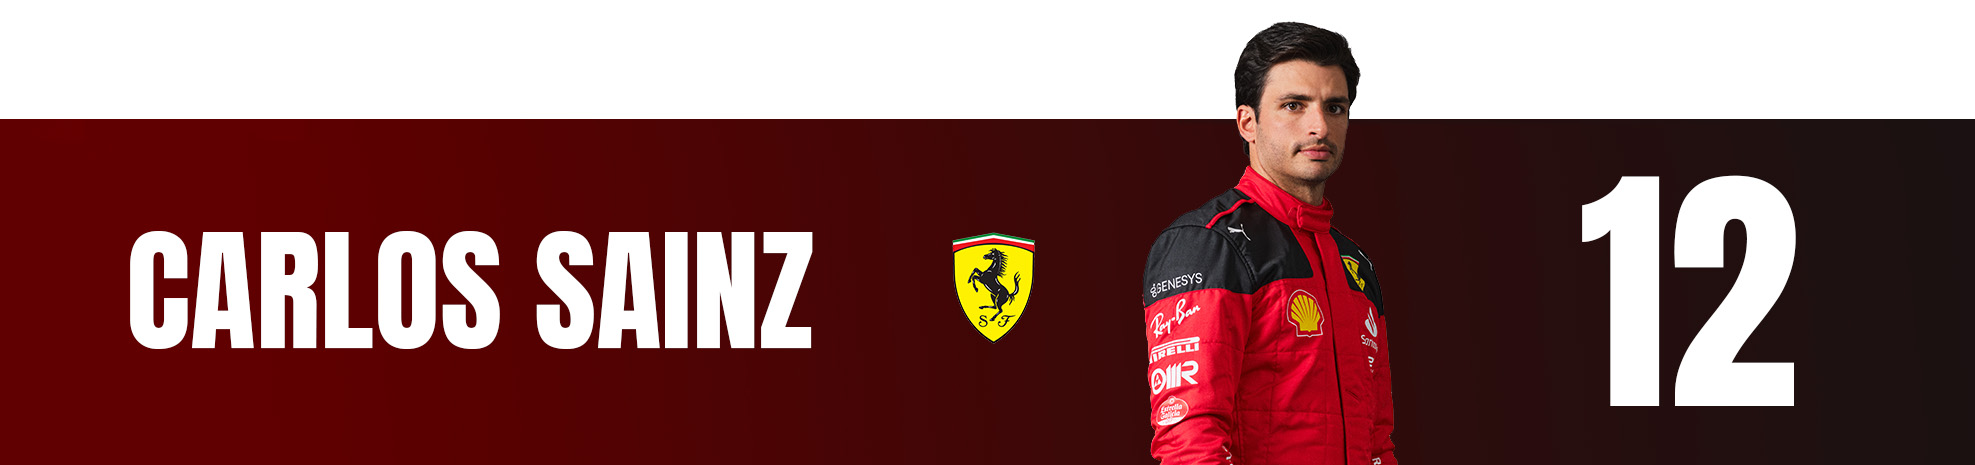 Carlos Sainz F1 Monaco GP ranking